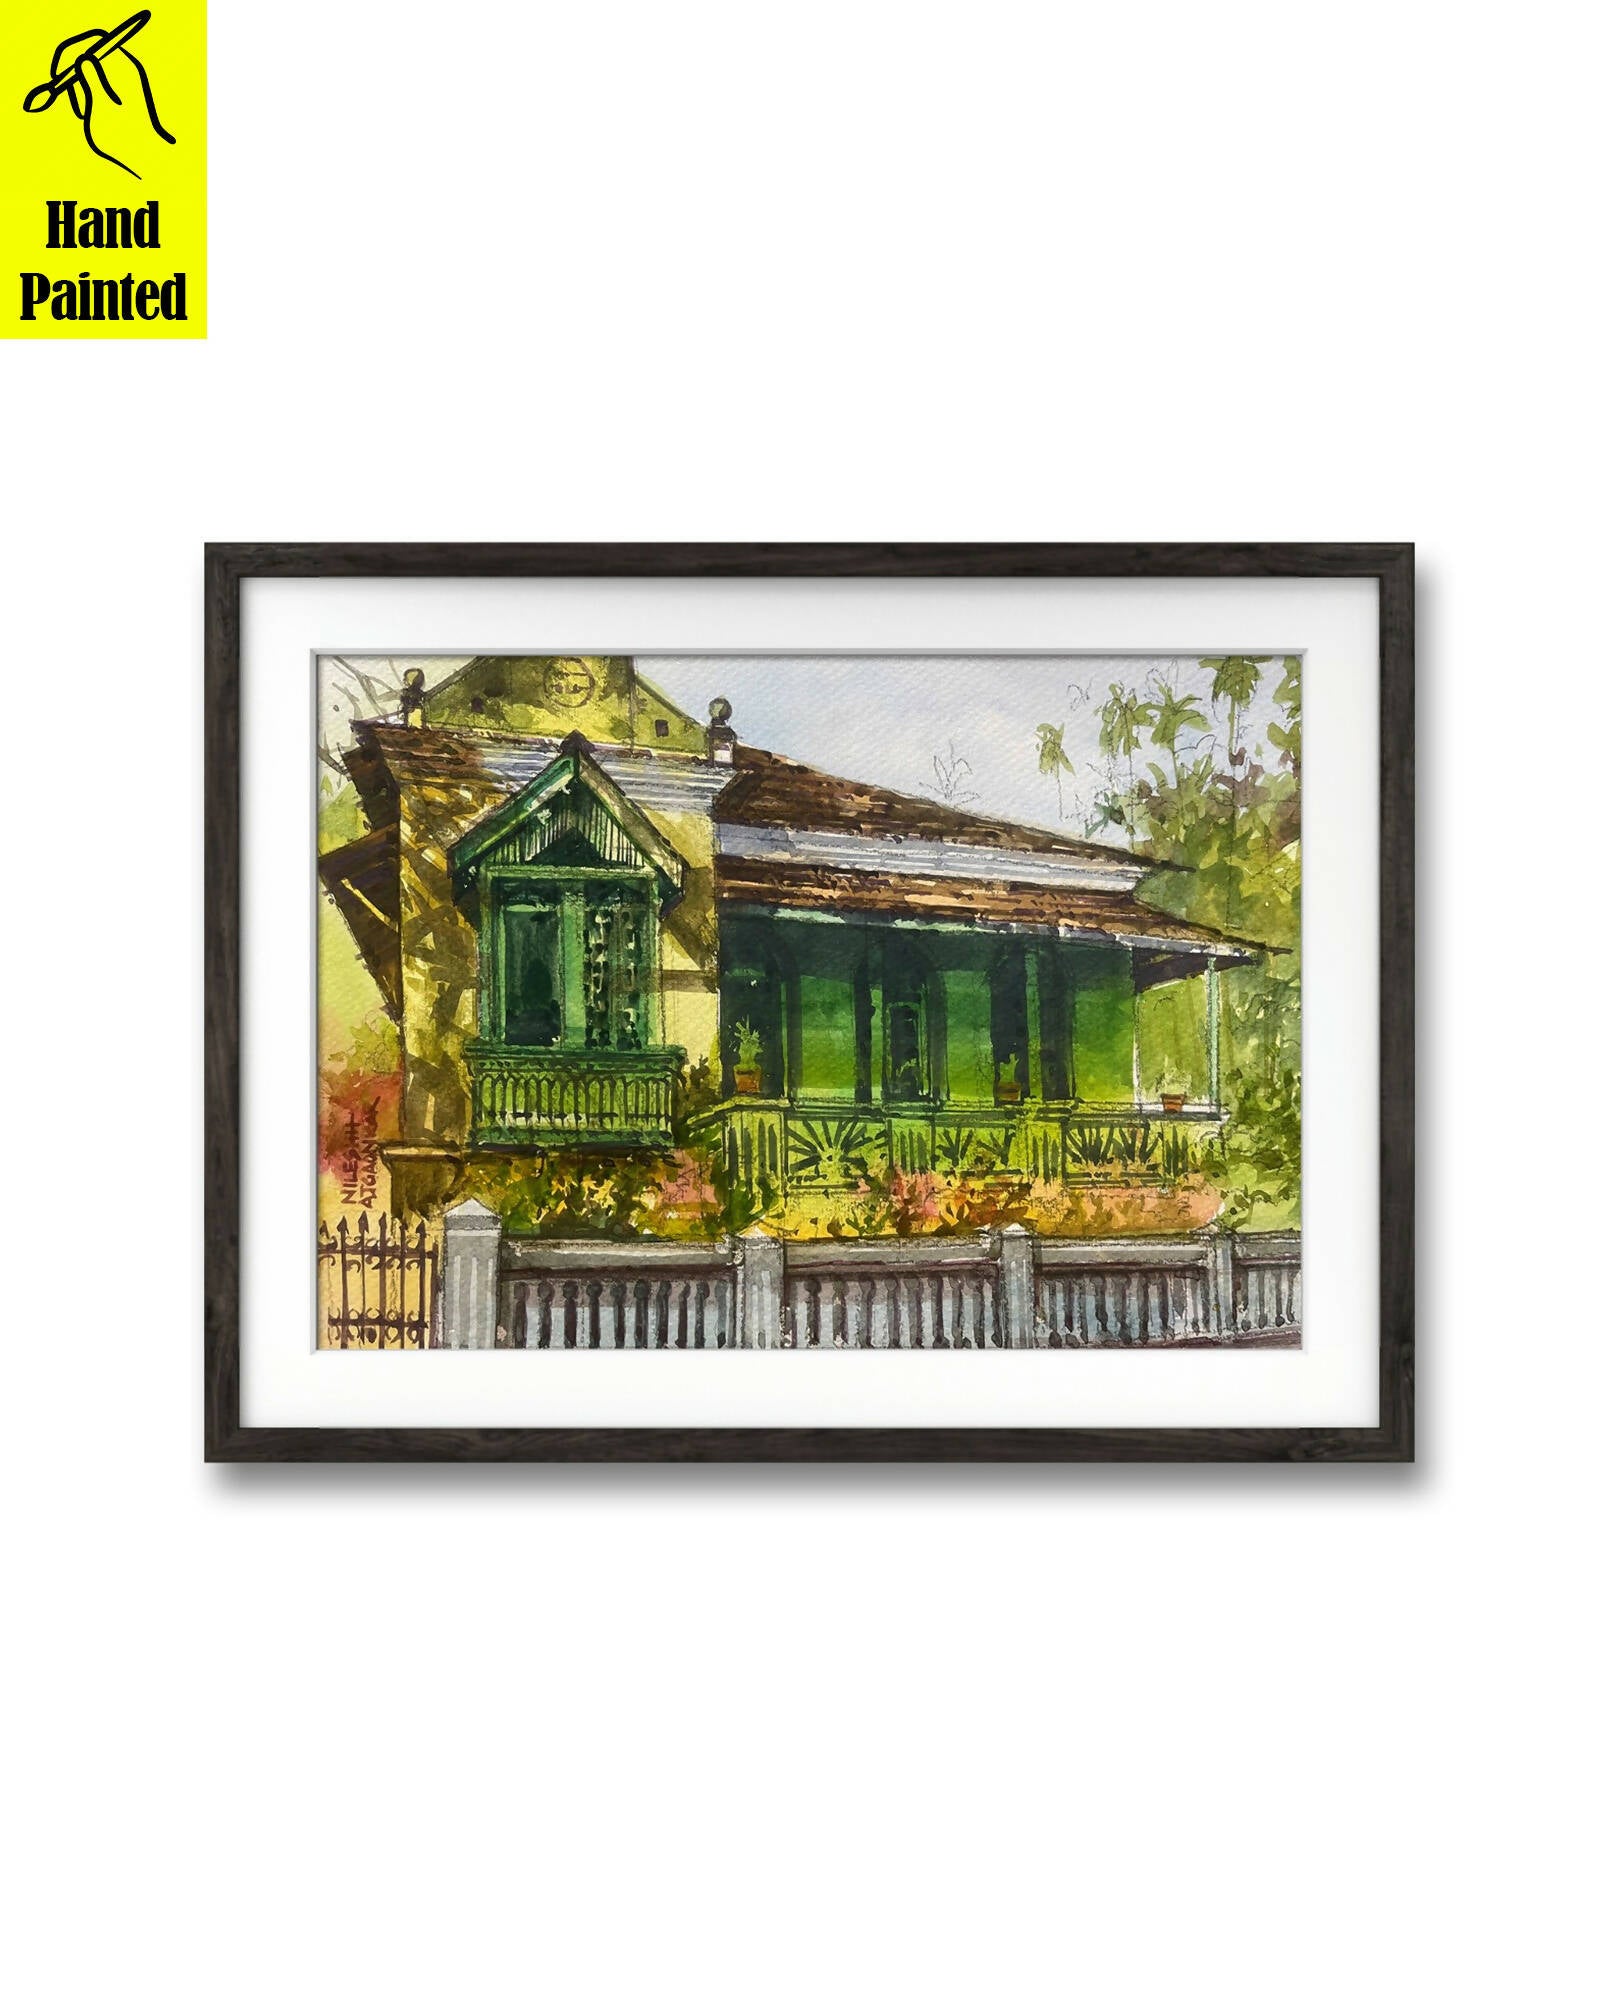 Title: Goan house, Decorative wall